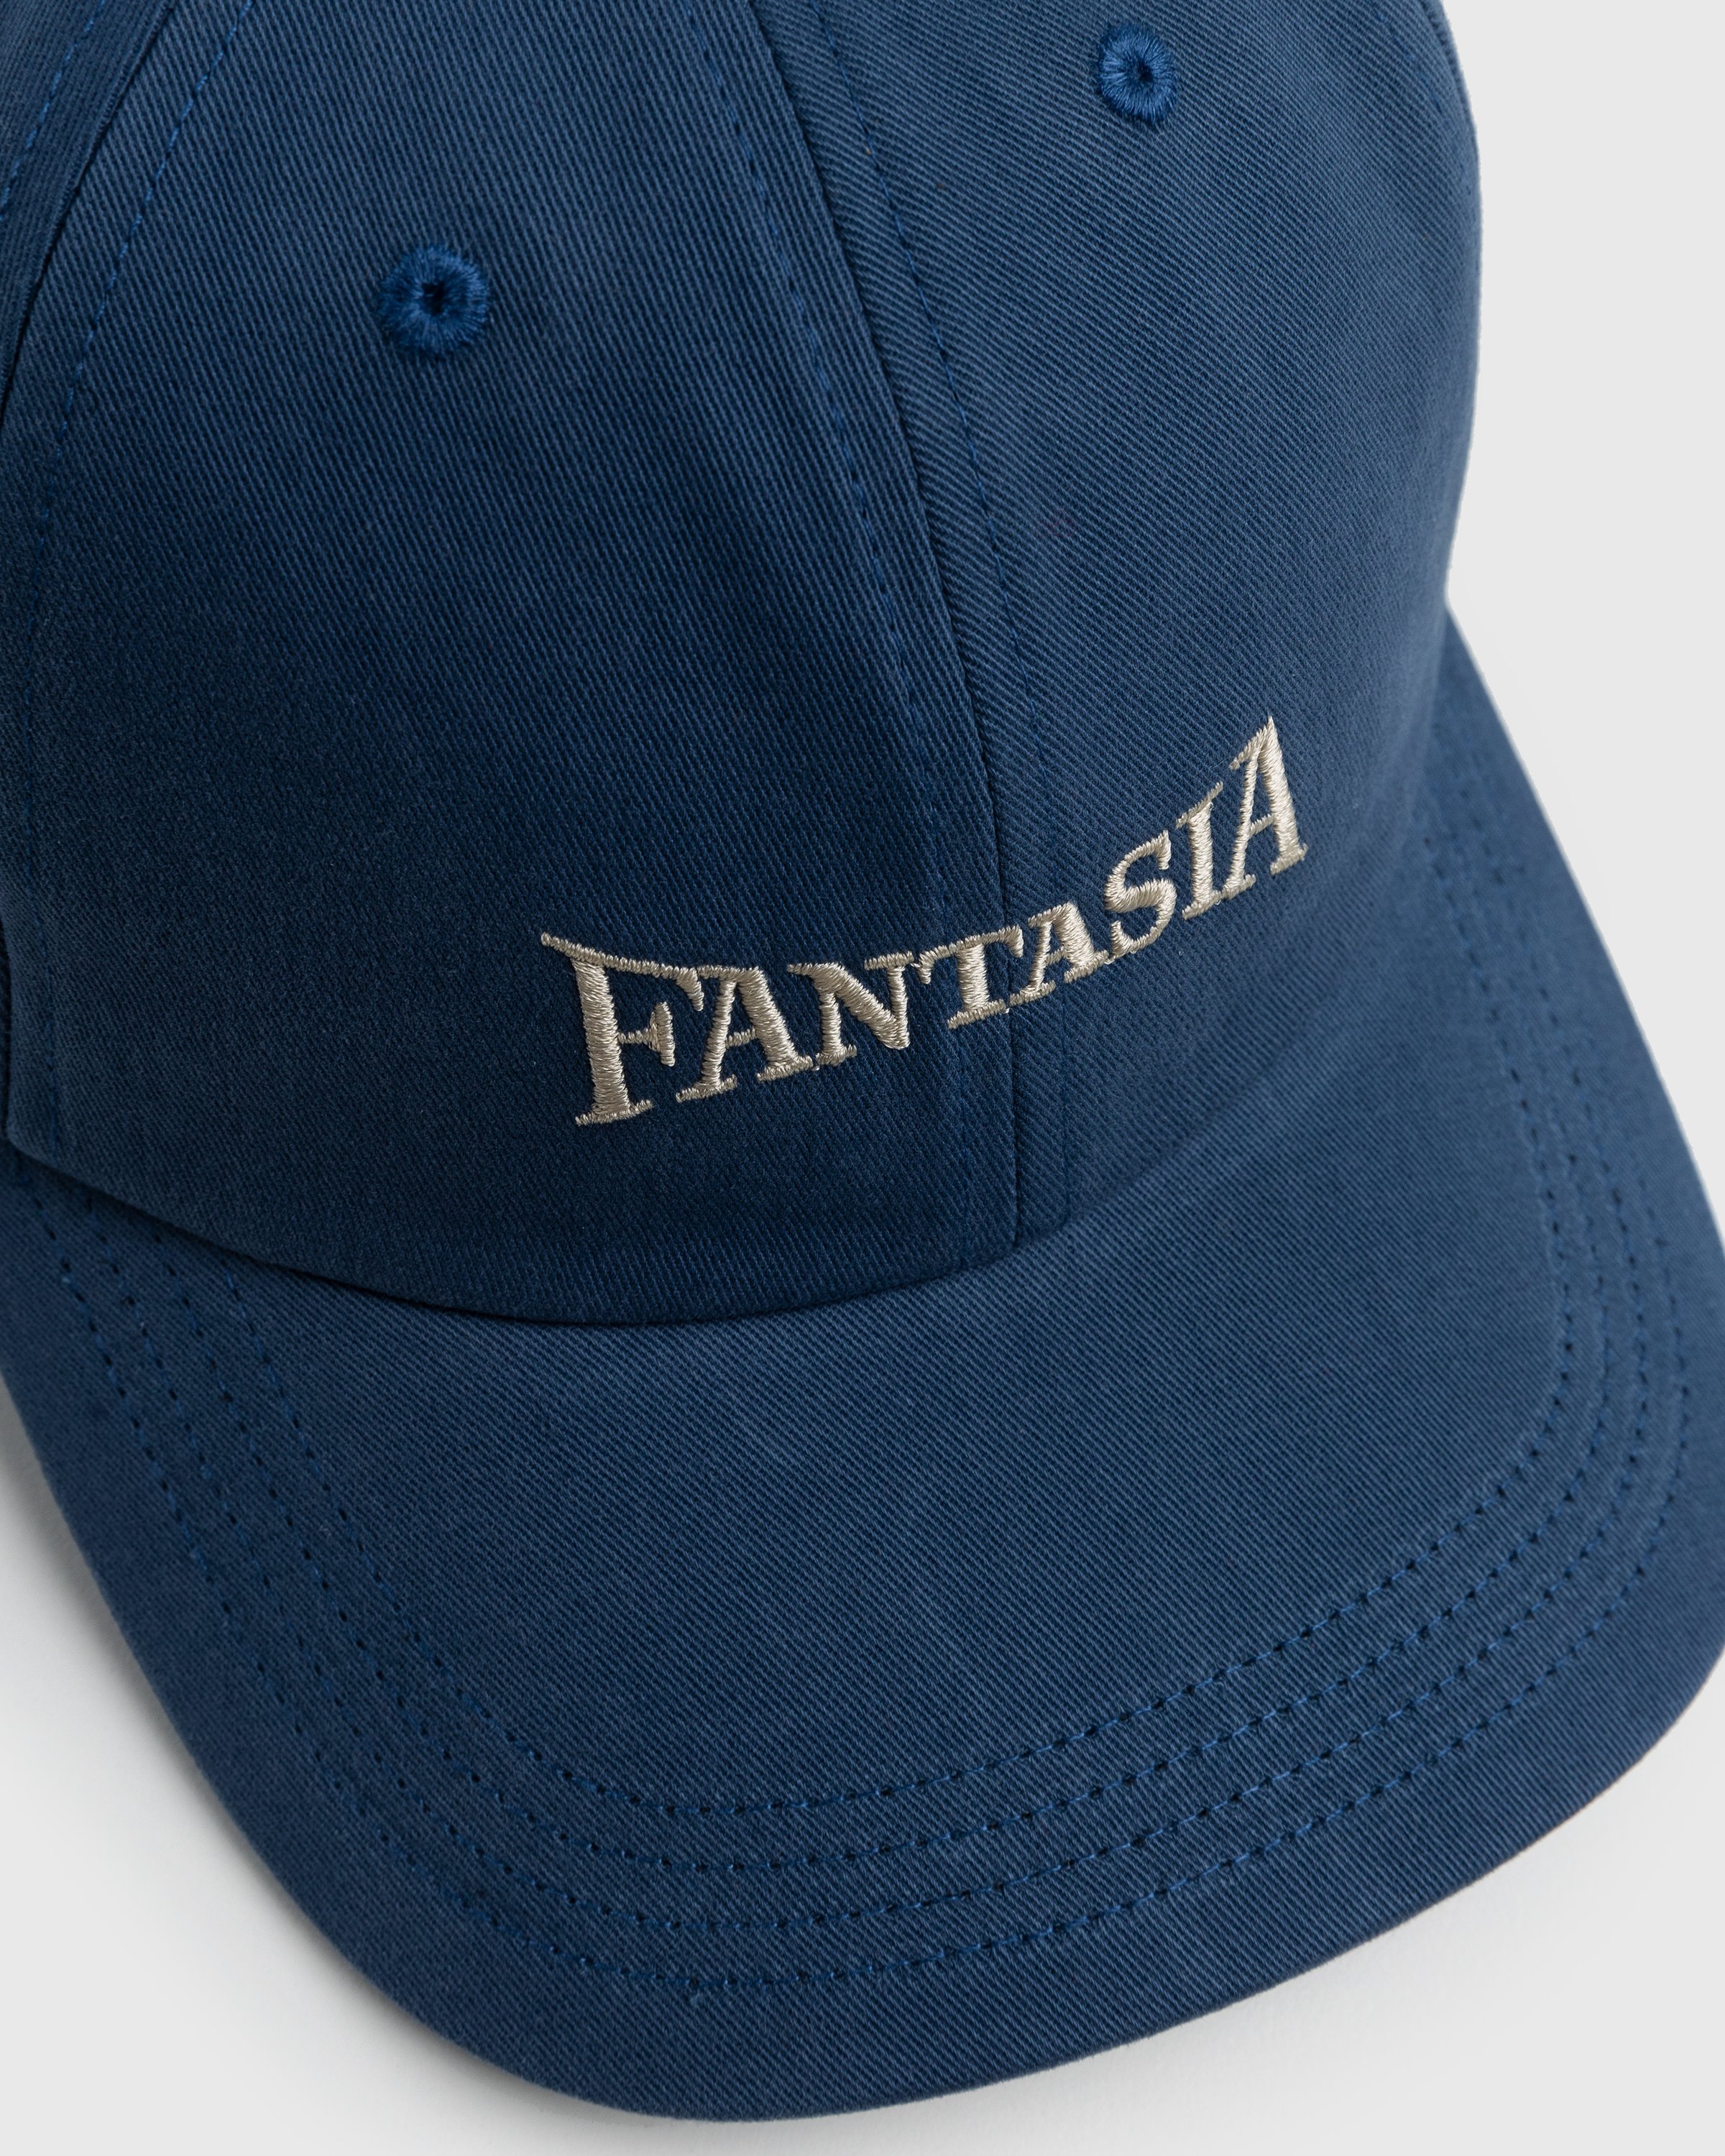 Disney Fantasia x Highsnobiety - Fantasia Cap Blue - Accessories - Blue - Image 6